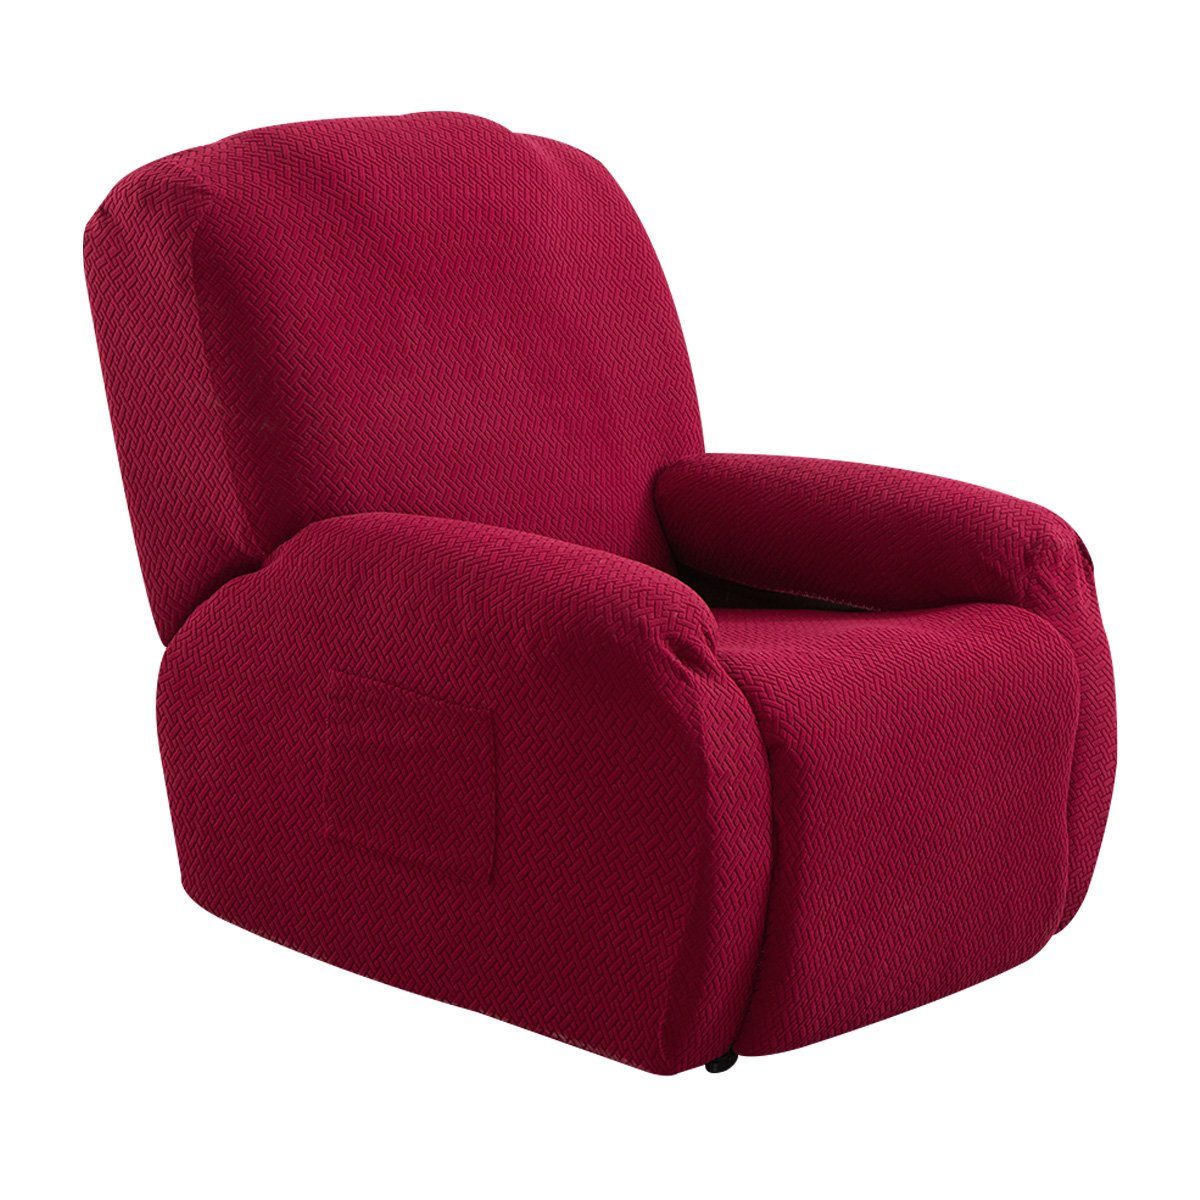 Sesselhusse Sesselbezug Stretchhusse, Relaxsessel Komplett für Liege Sessel, Rosnek, mit Strukturoptik Rot